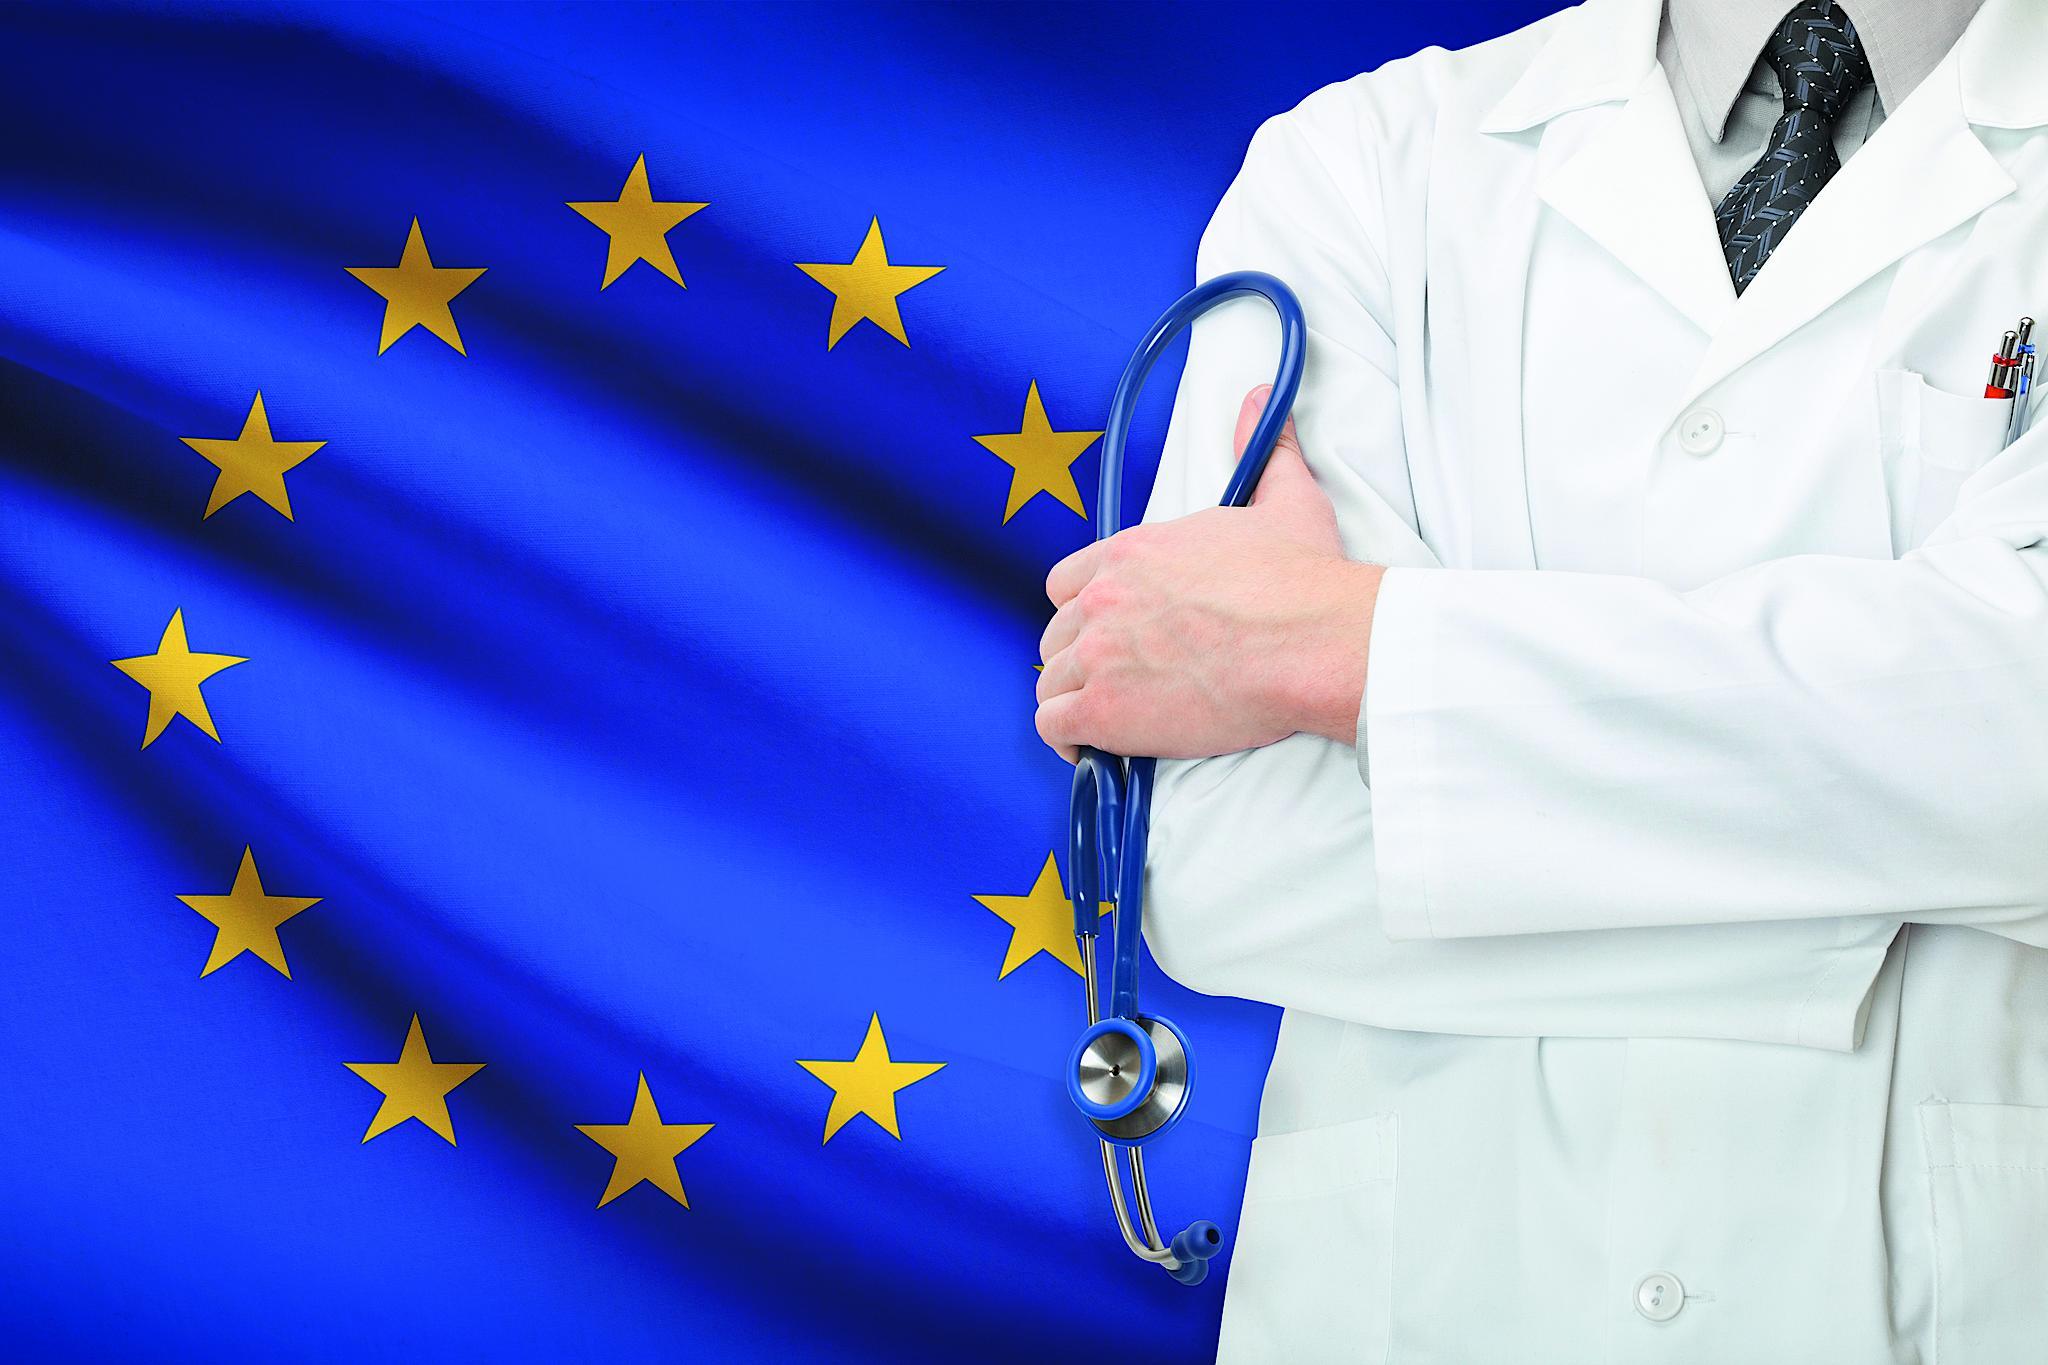 Concept of national healthcare system - EU - European Union